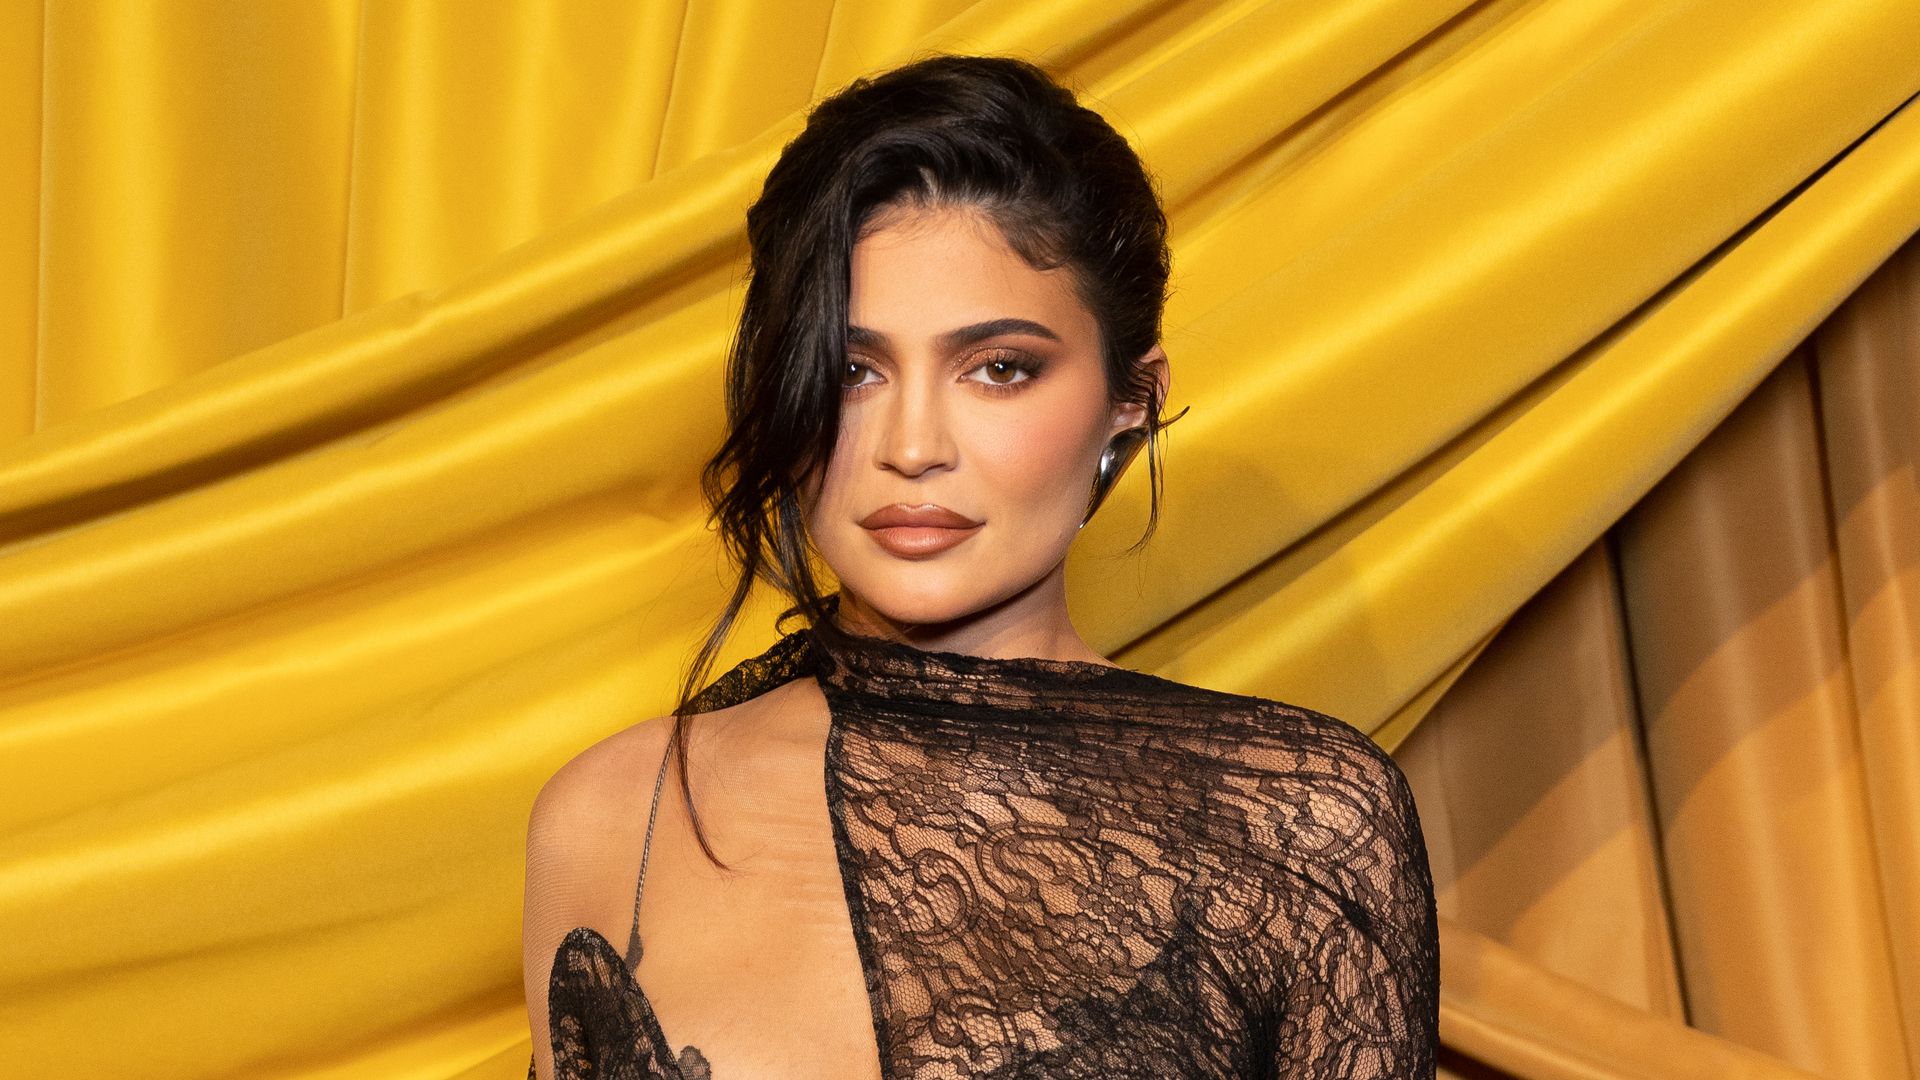 Kylie Jenner wearing an asymmetric lace dress at Paris Fashion Week 